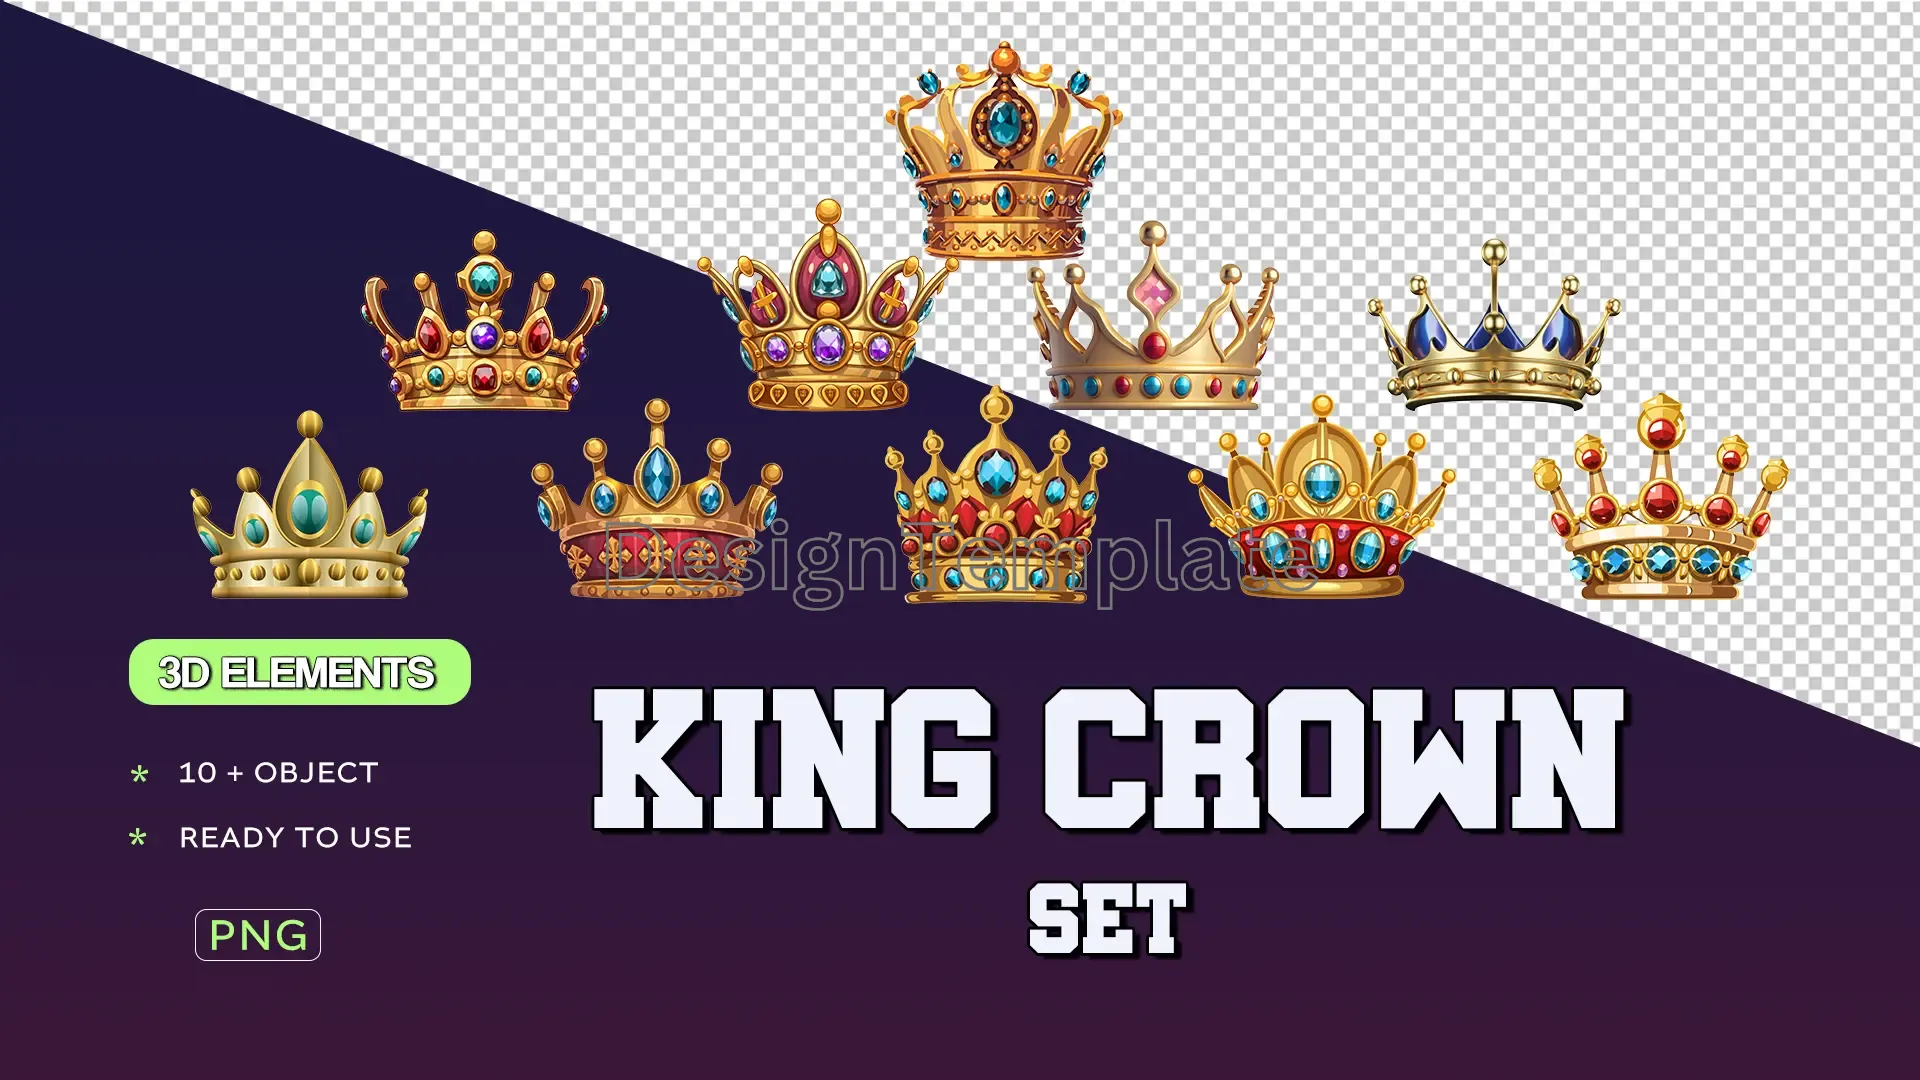 Monarch's Crown Elite 3D King Crown Set